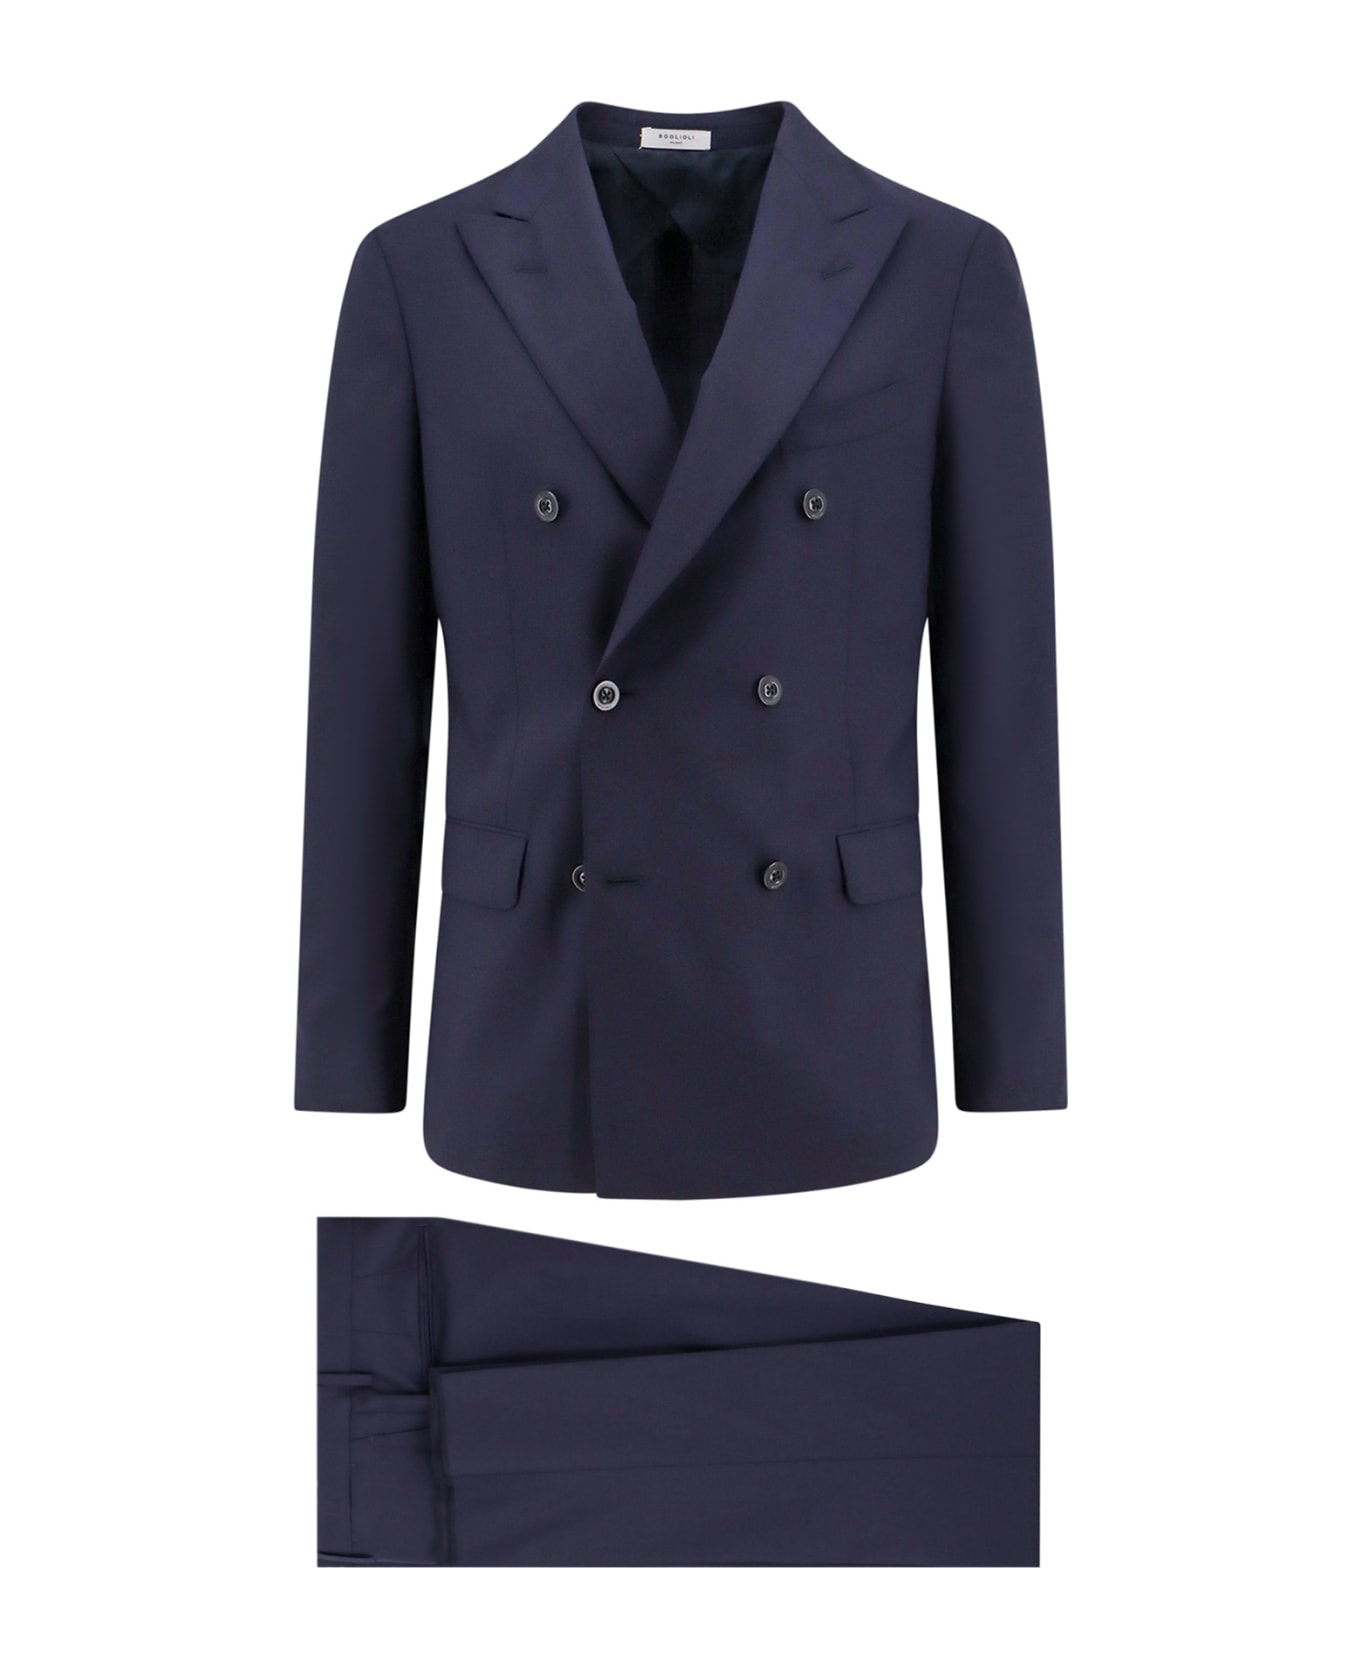 Boglioli Suit - Blue